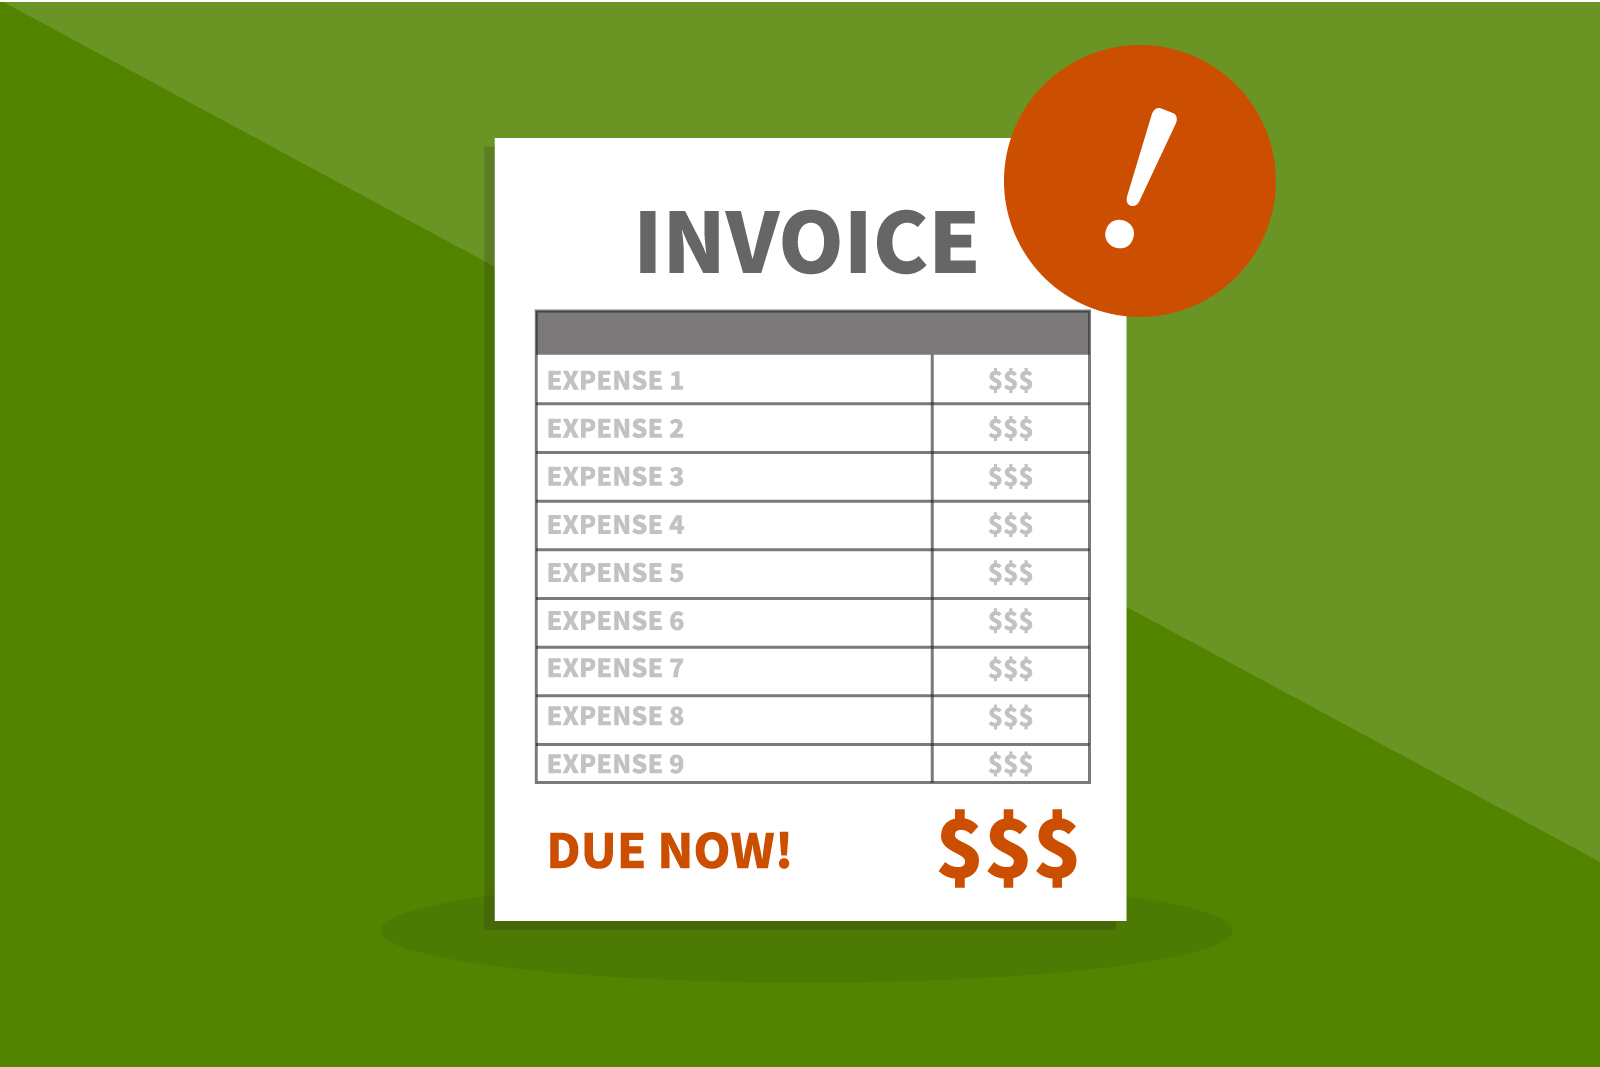 illustration of an invoice depicting vendor fraud